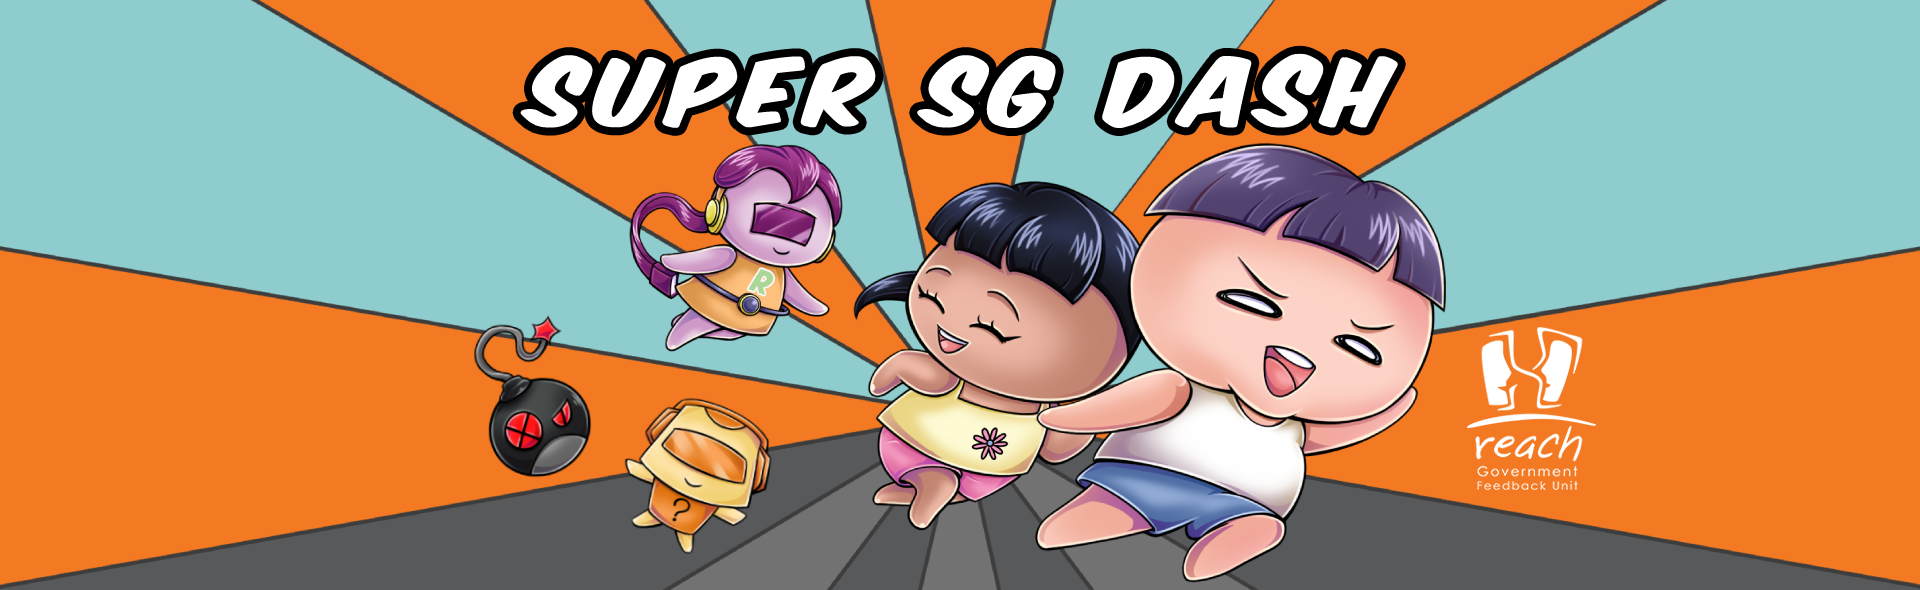 Super SG Dash Banner Mobile